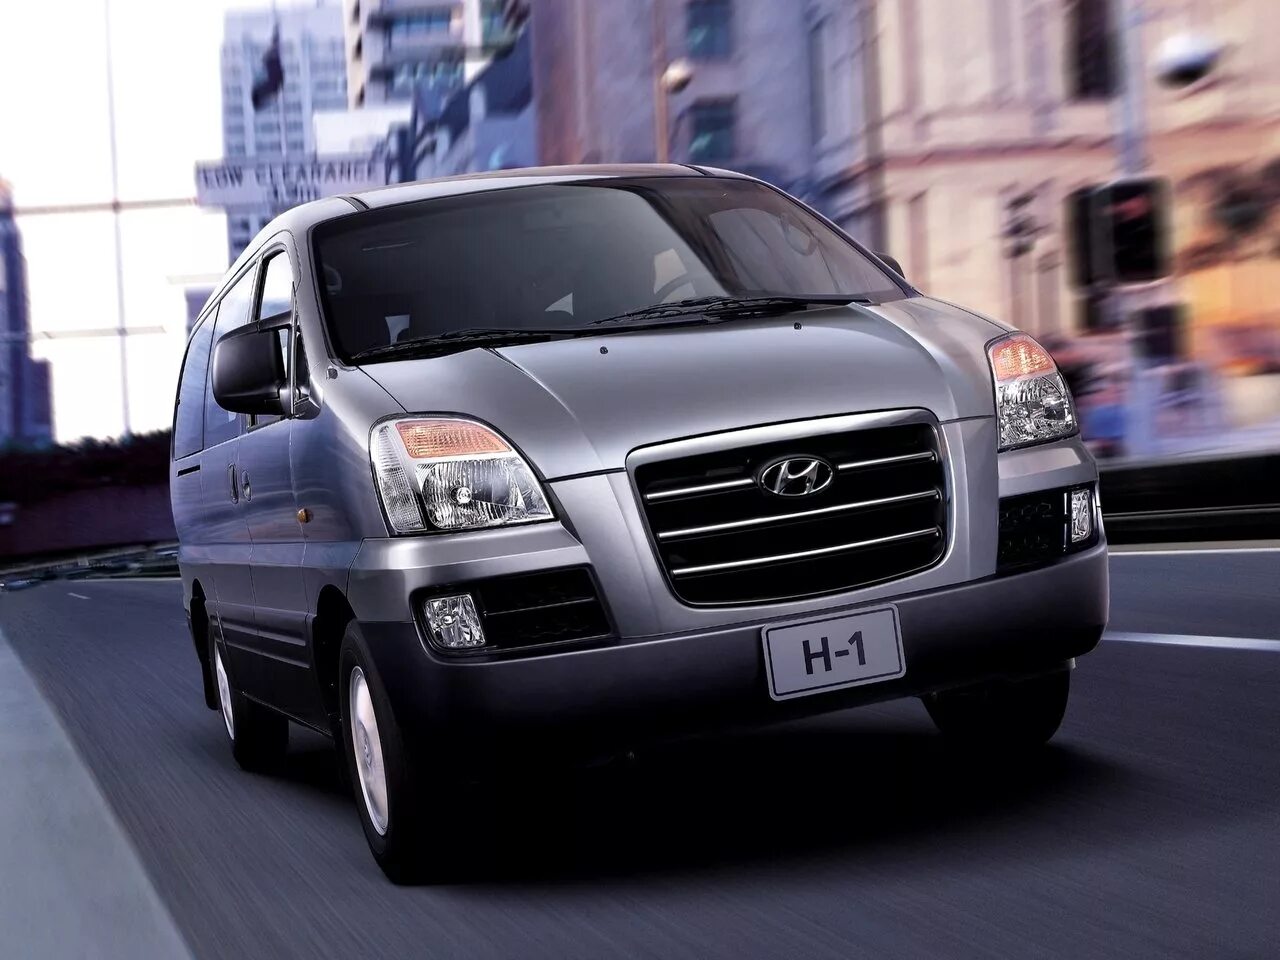 Hyundai Starex h1. Hyundai h1 2007. Hyundai Starex h1 2004. Hyundai Starex h1 2007. Купить хендай аш 1